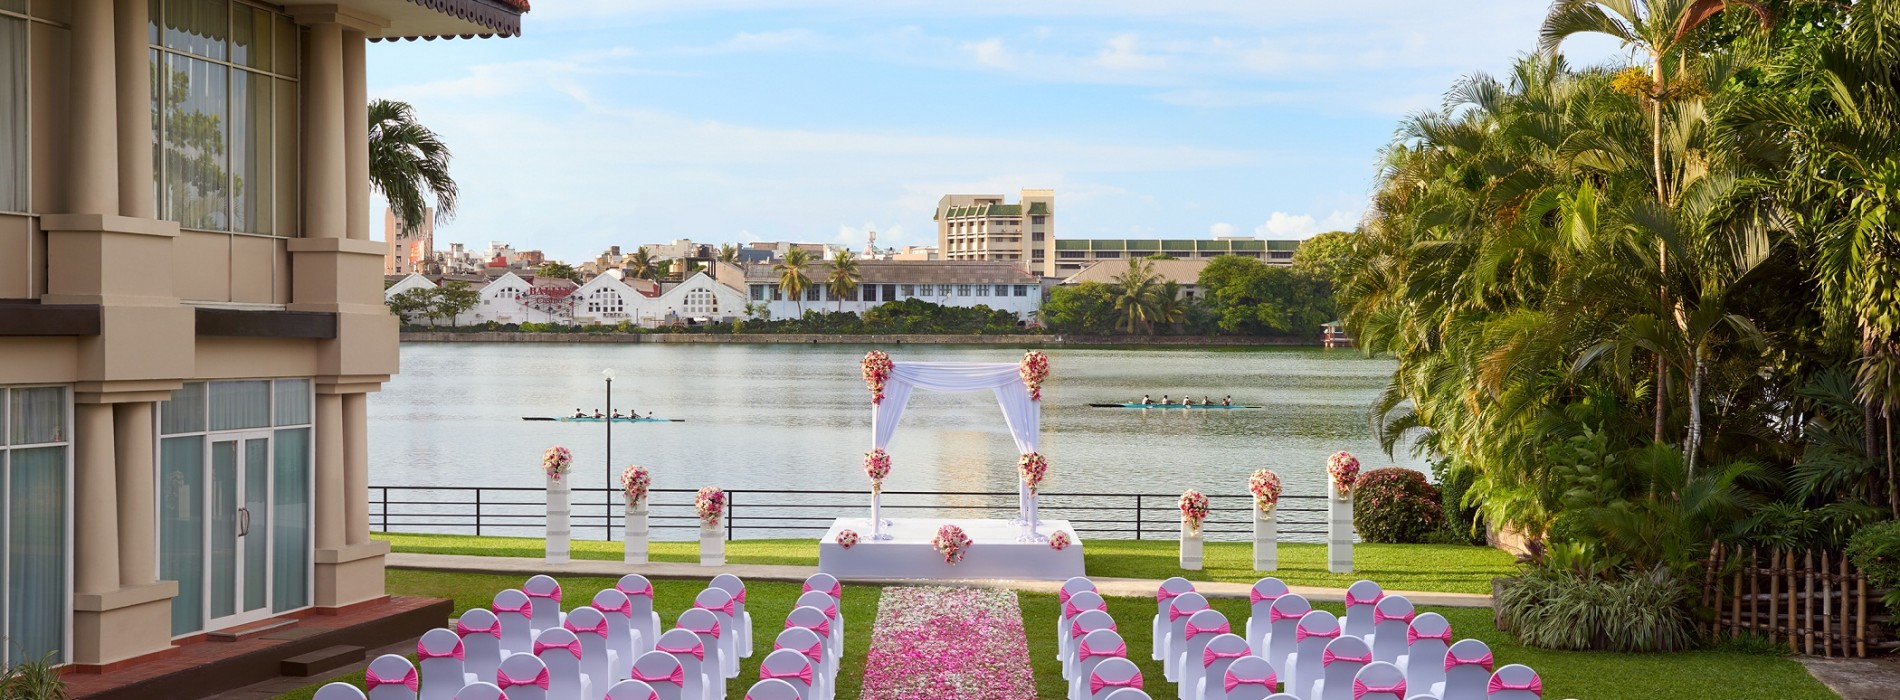 Cinnamon Hotels & Resorts in Sri Lanka organized a FAM trip for Indian wedding planners